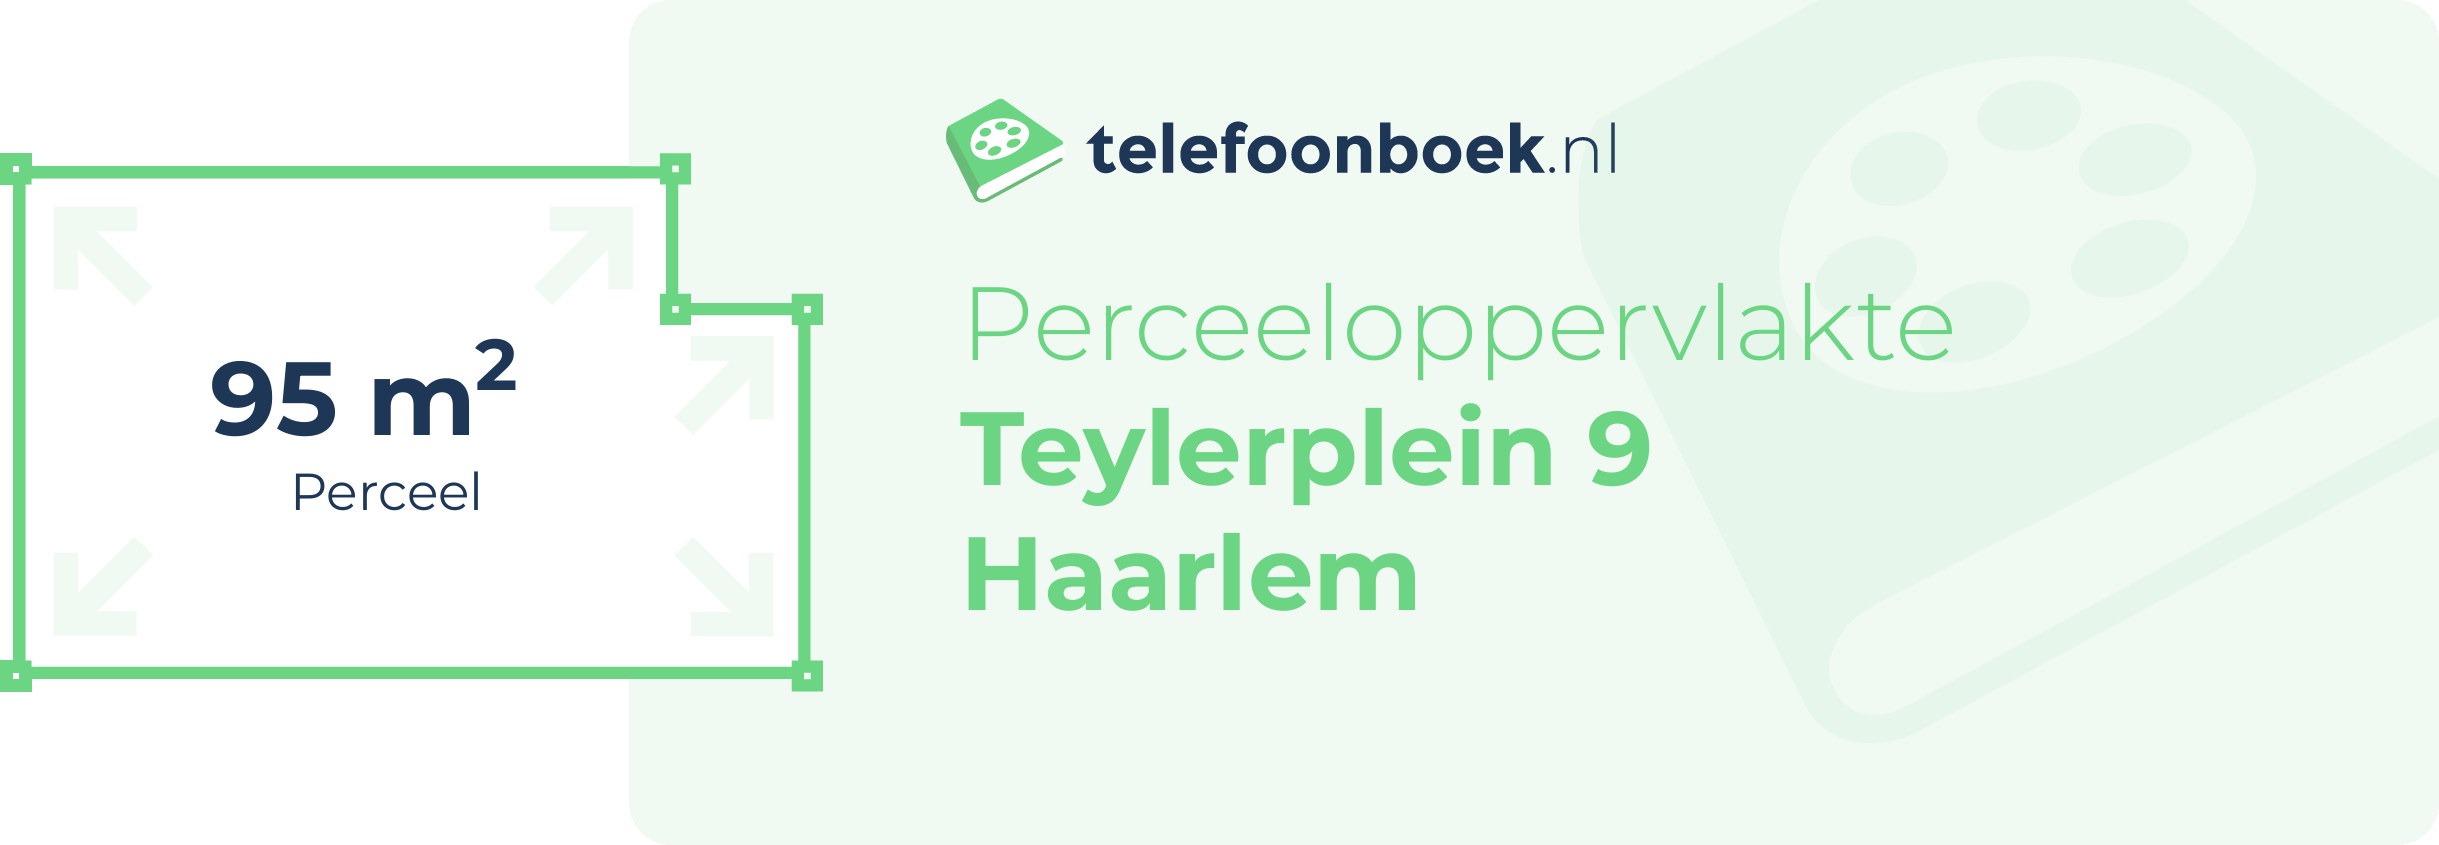 Perceeloppervlakte Teylerplein 9 Haarlem